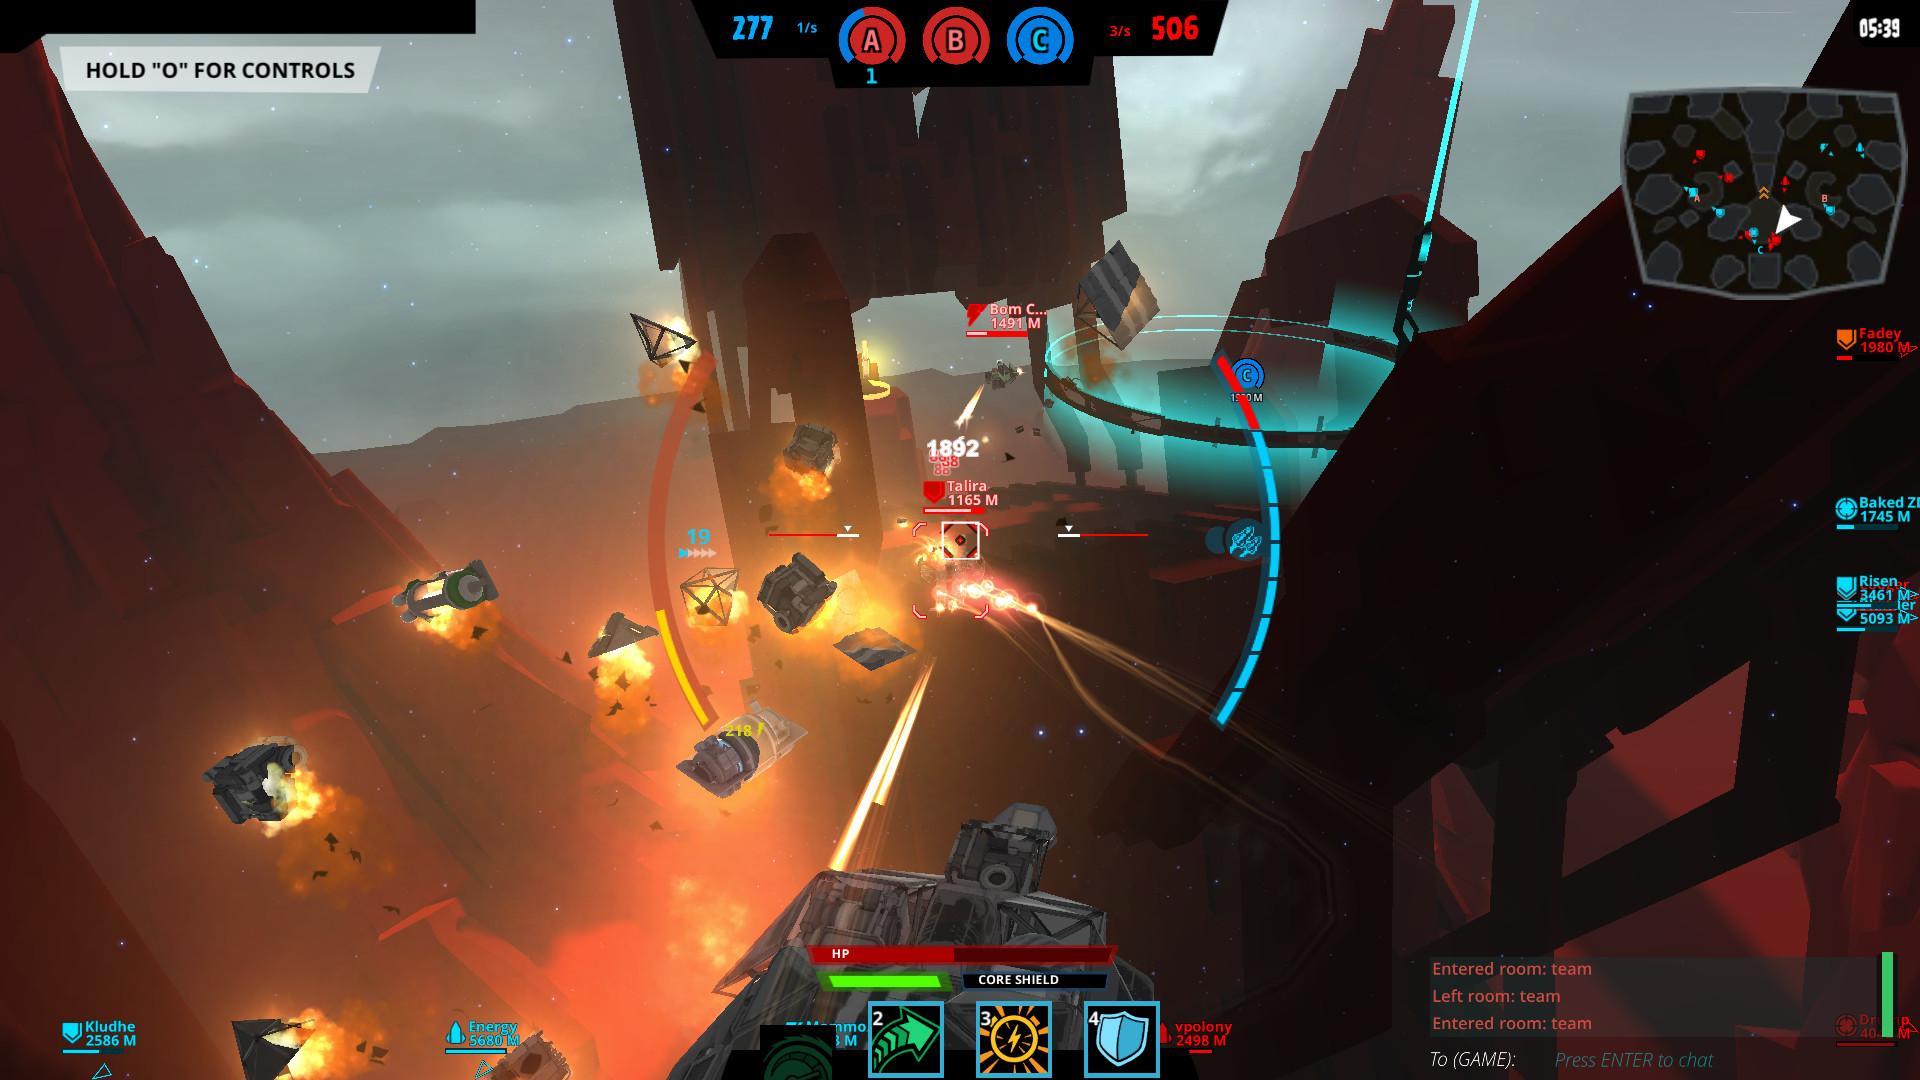 Screenshot №12 from game Galactic Junk League